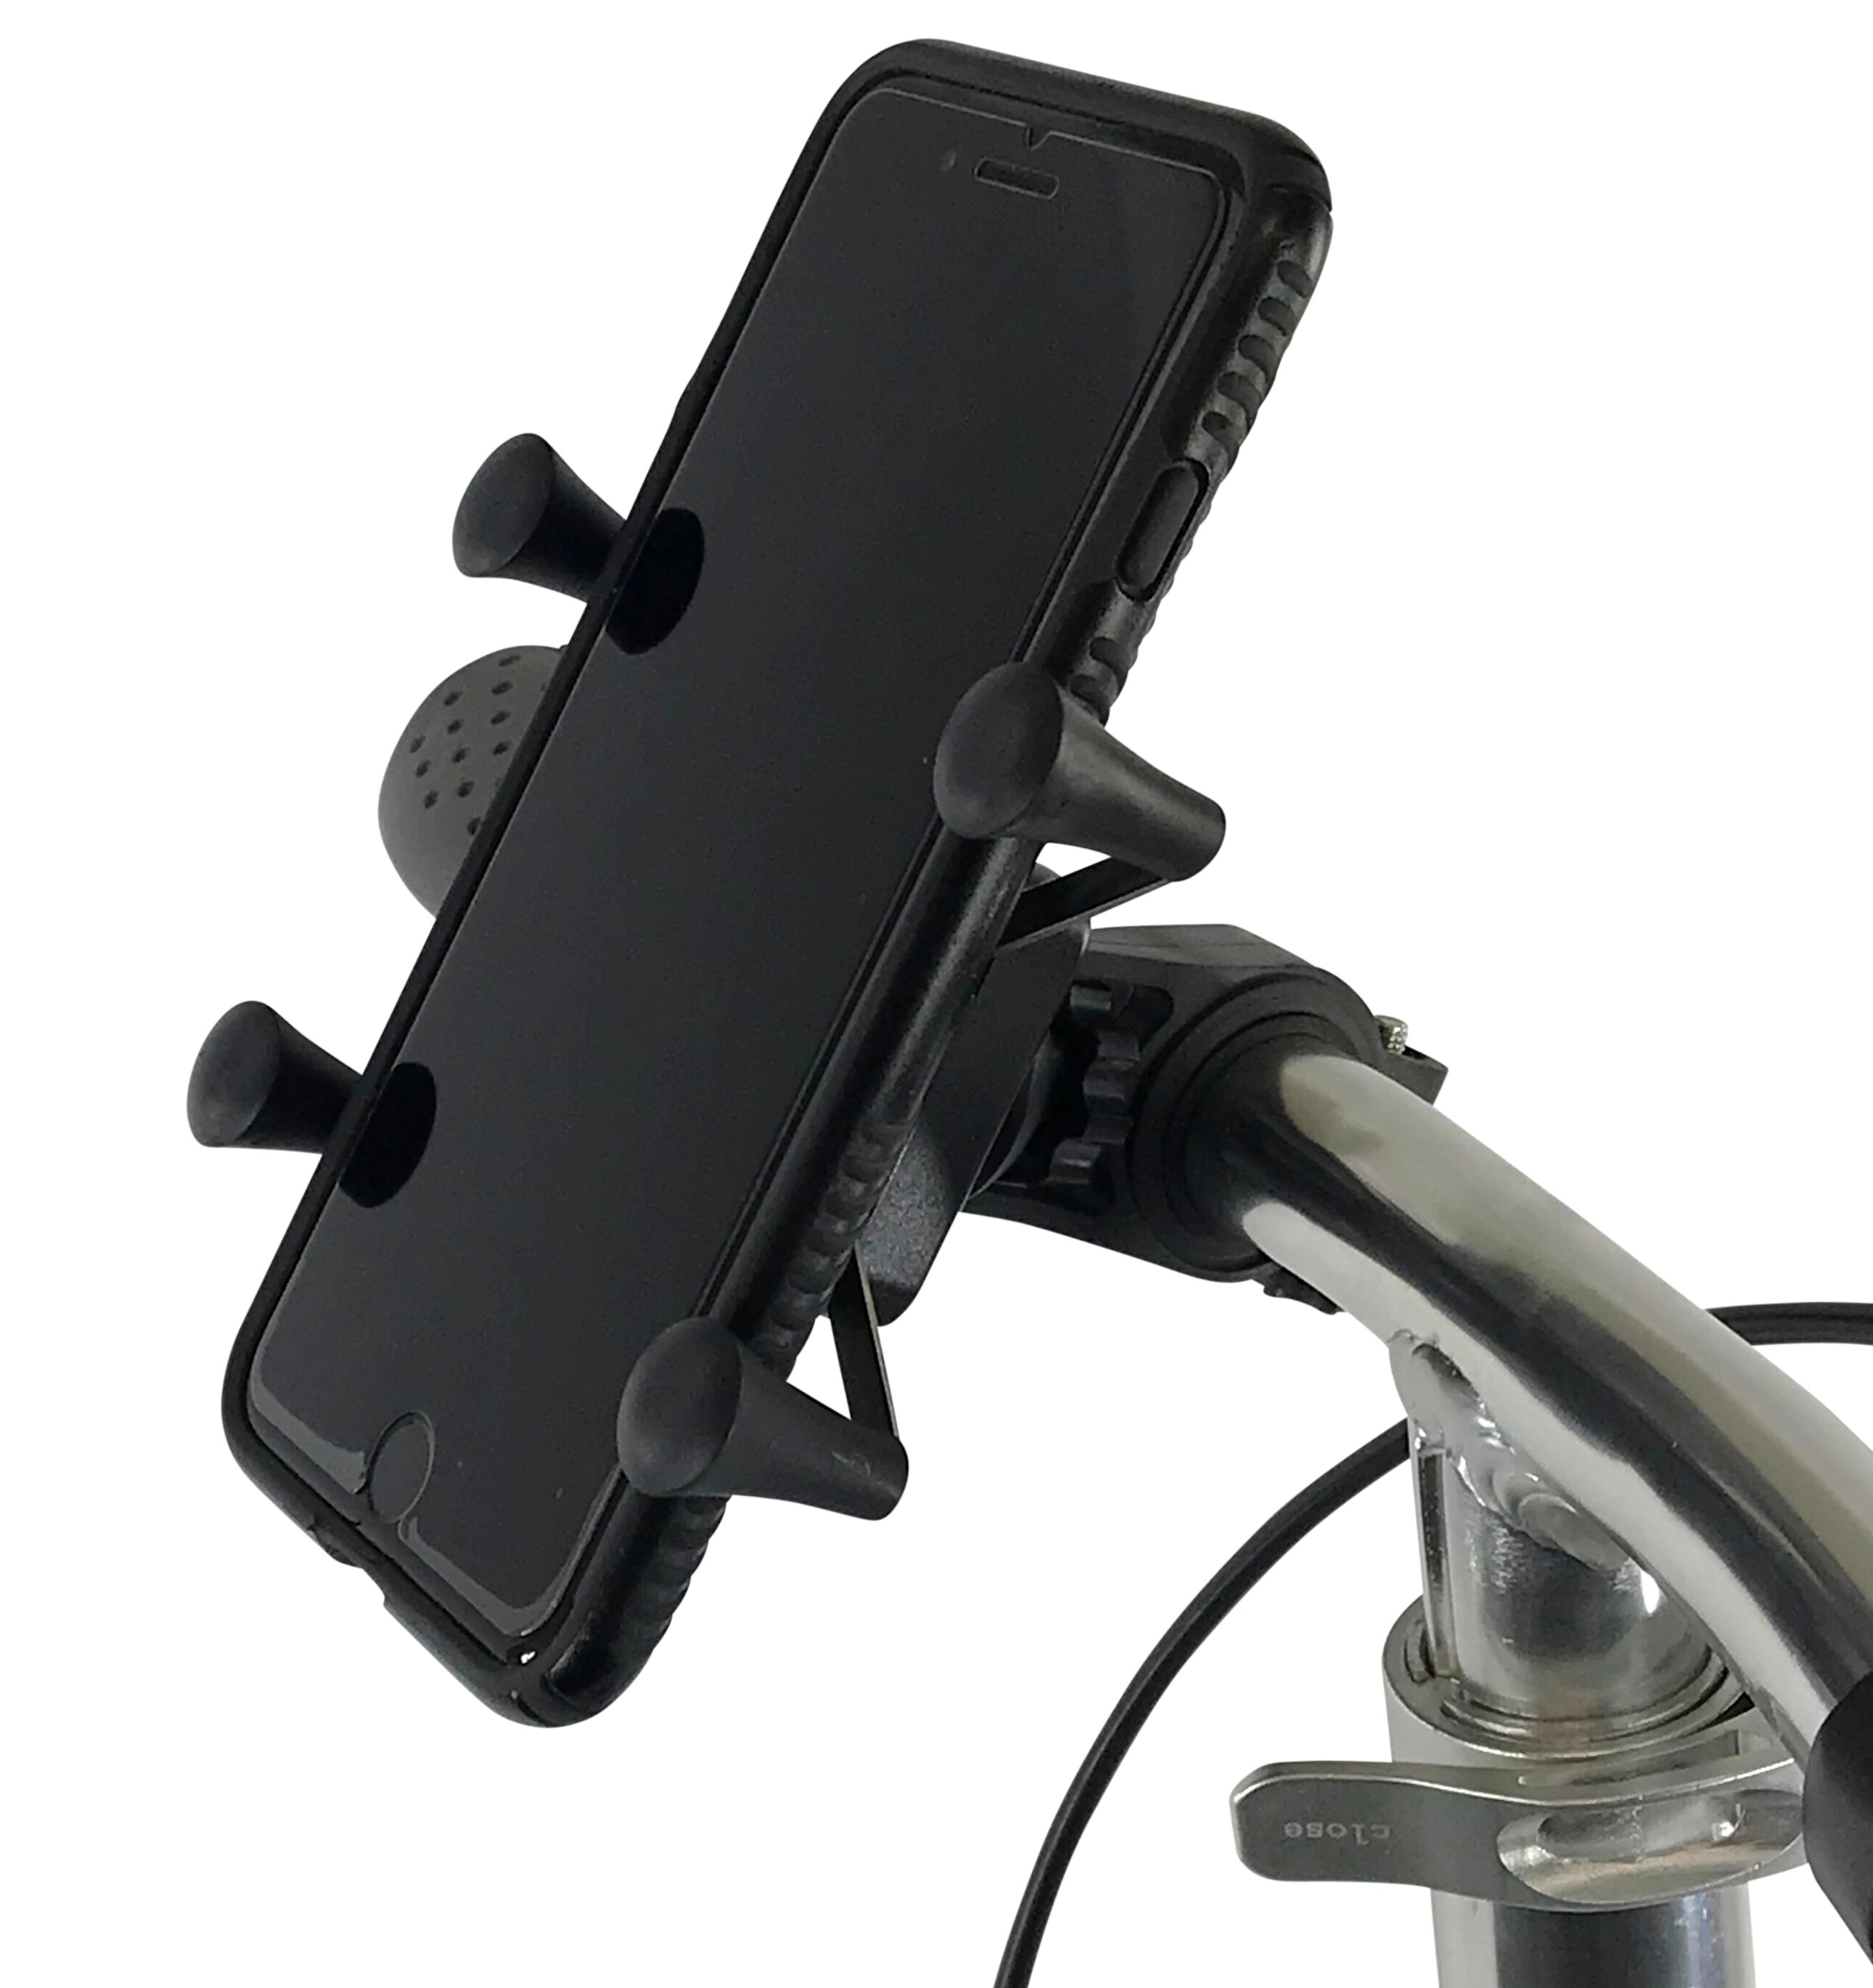 KneeRover Universal Deluxe Phone Holder Mount Designed for Knee Scooters